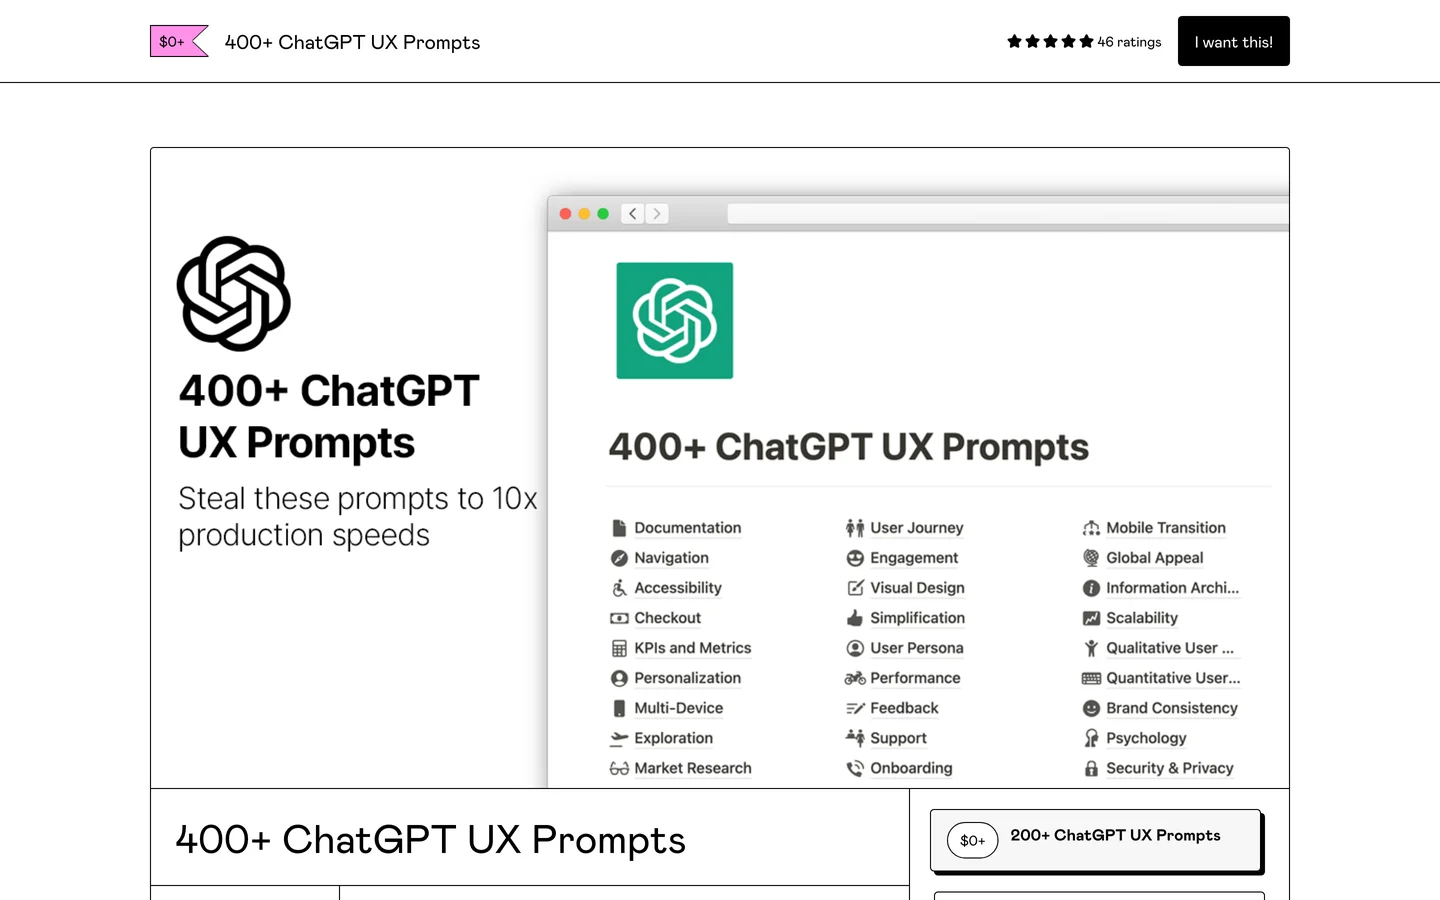 400+ ChatGPT UX Prompts